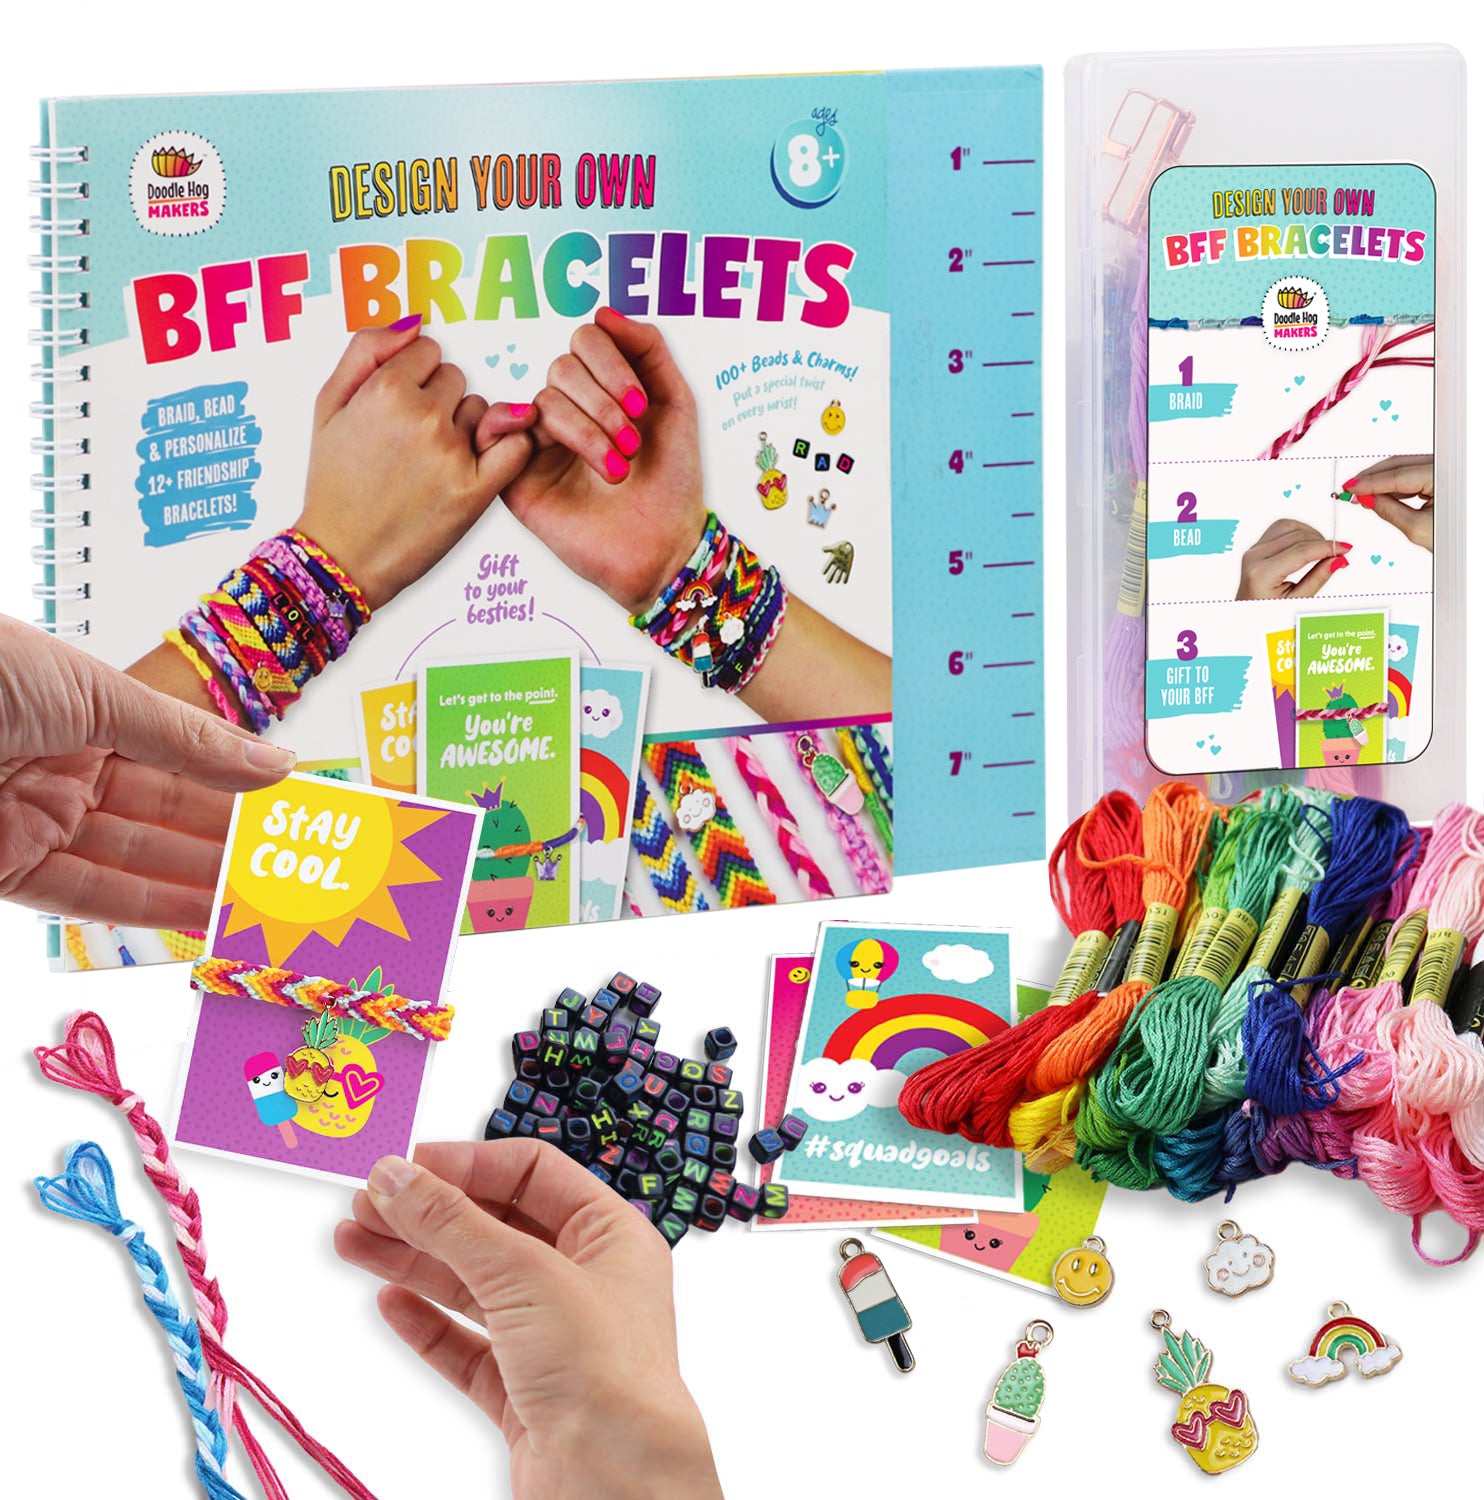 Friendship Bracelet Making Kit,Arts and Crafts for Kids Ages 8-12